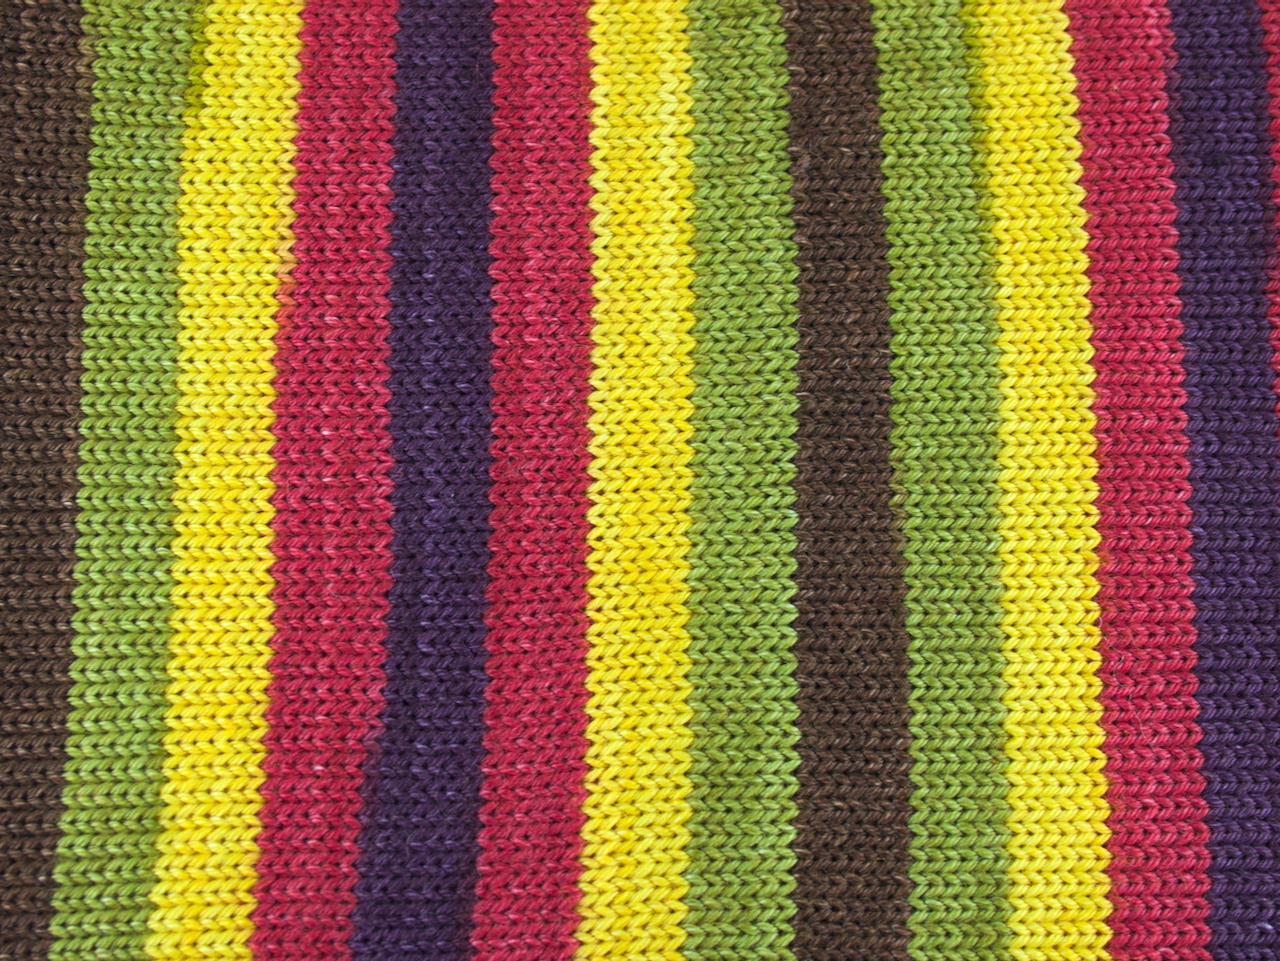 Autumn self-striping sock yarn